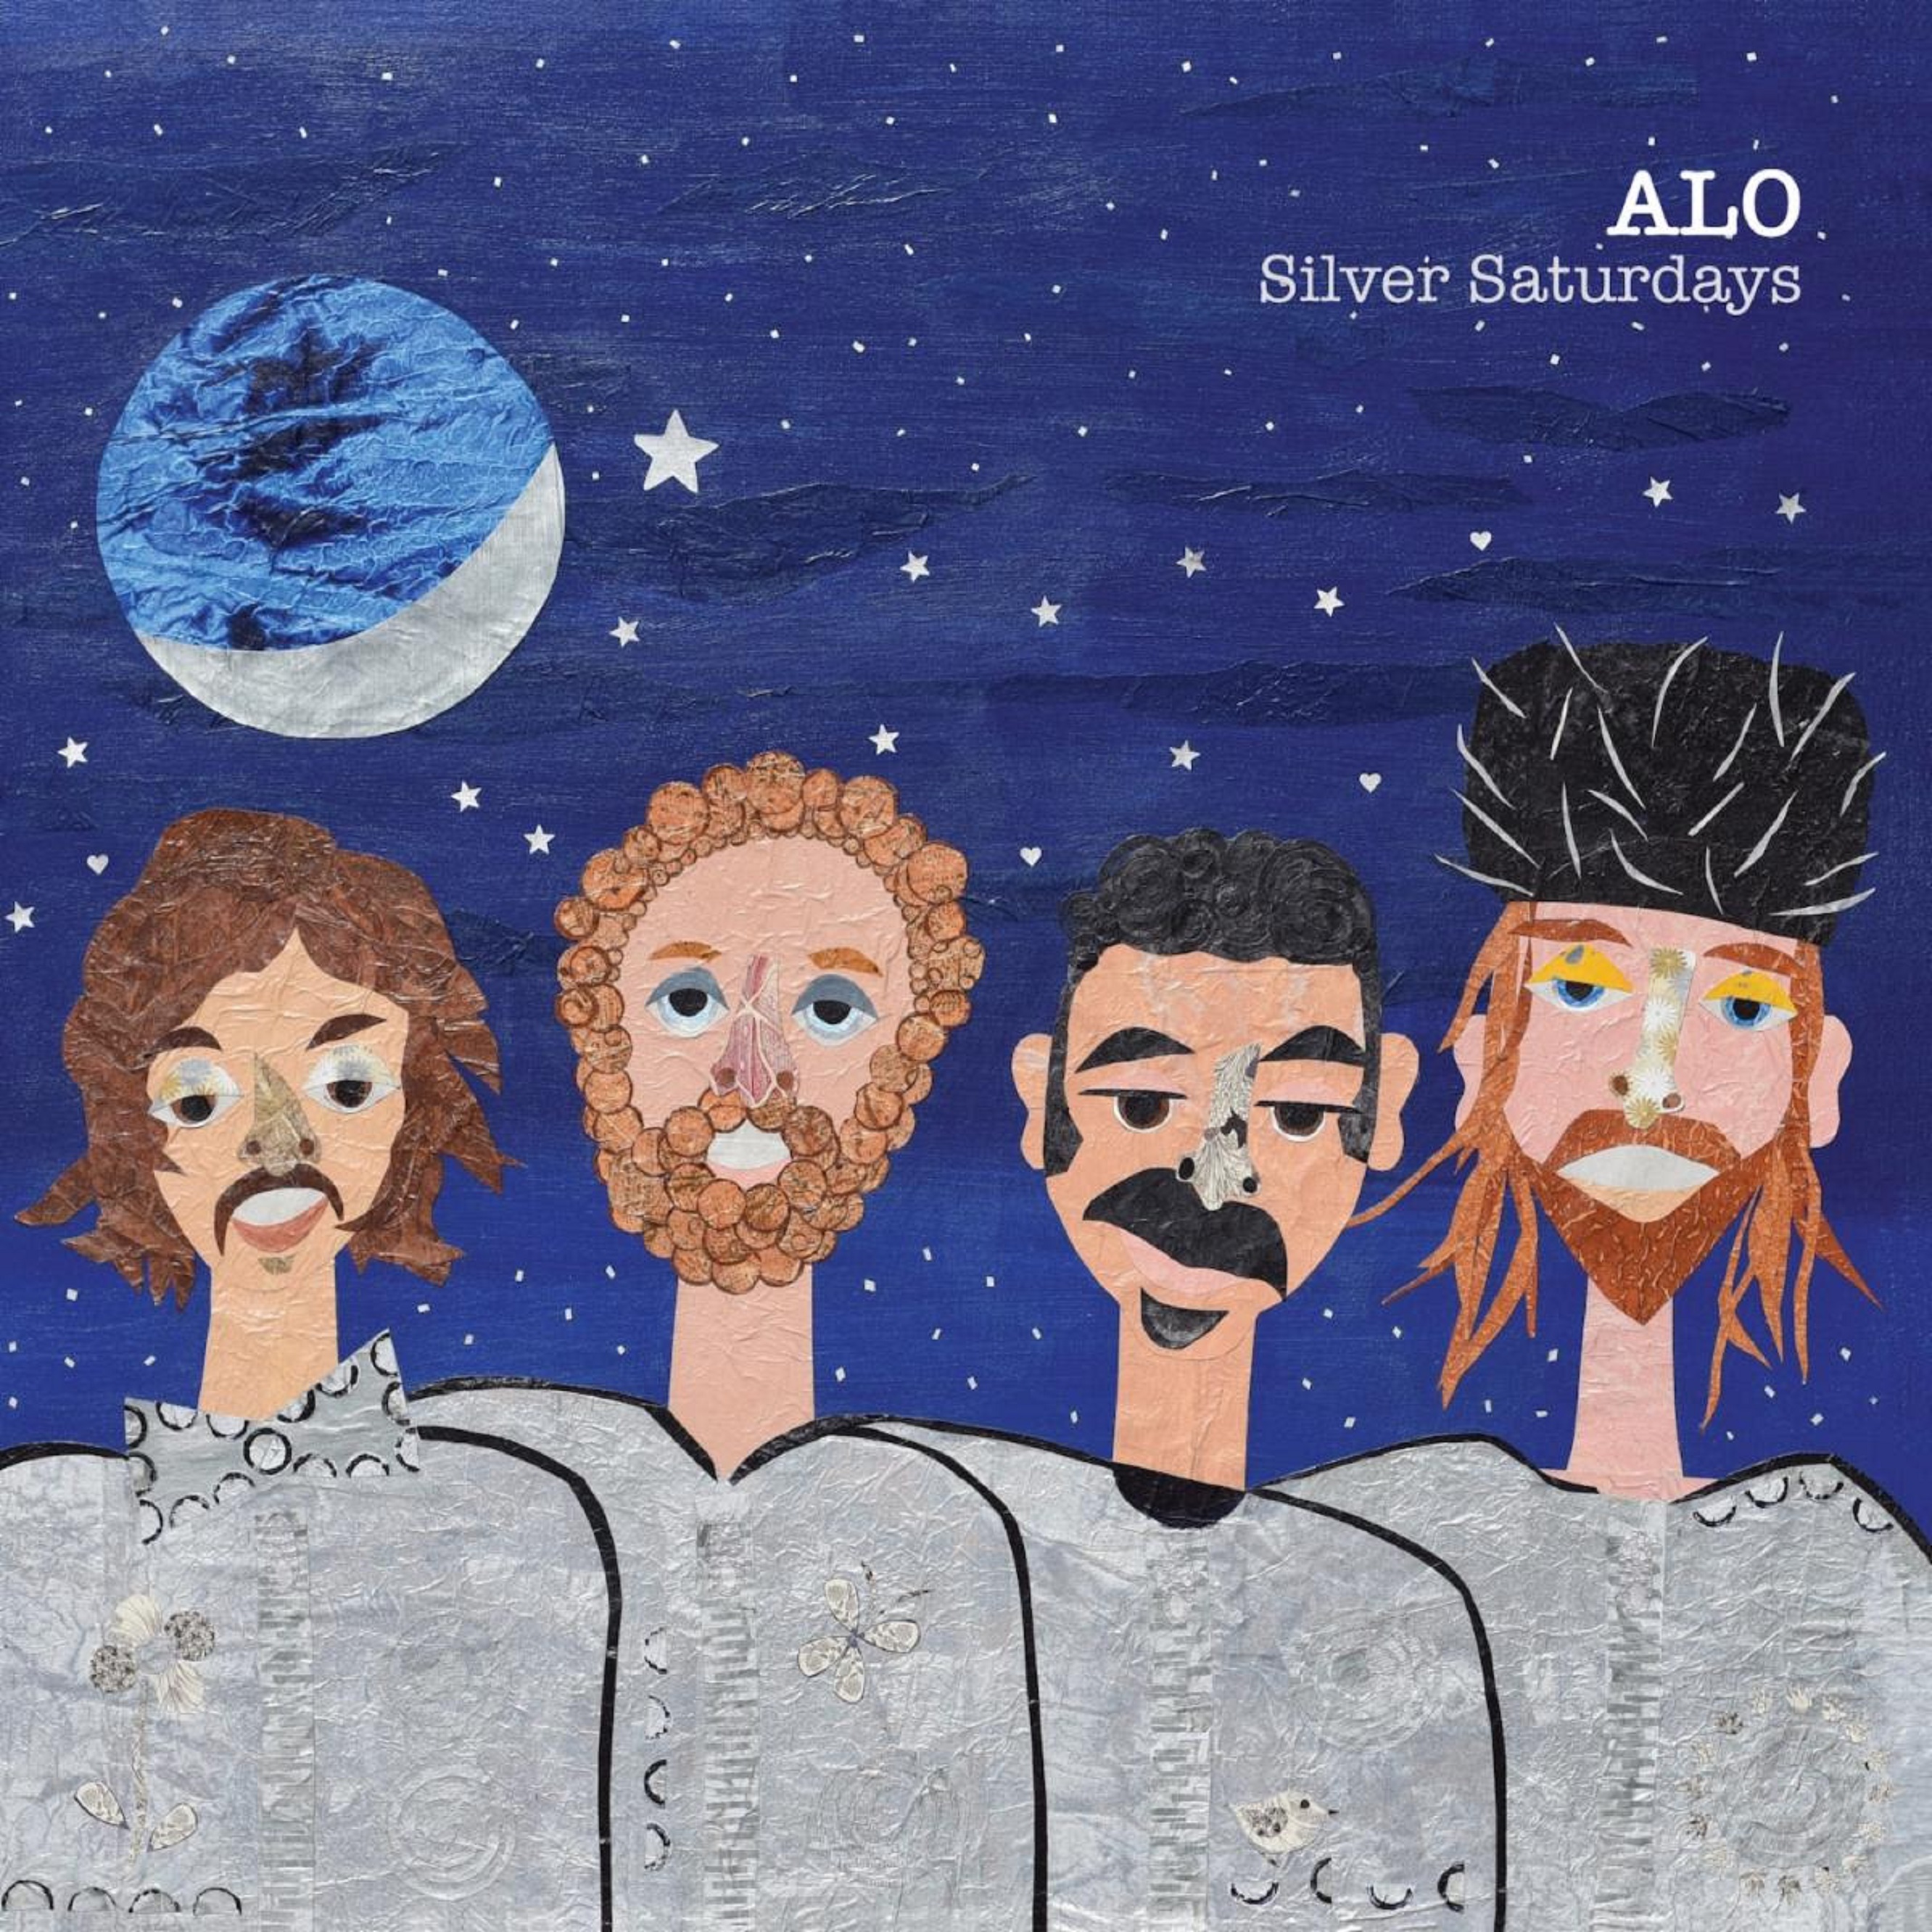 ALO SHARE NINTH FULL-LENGTH ALBUM SILVER SATURDAYS